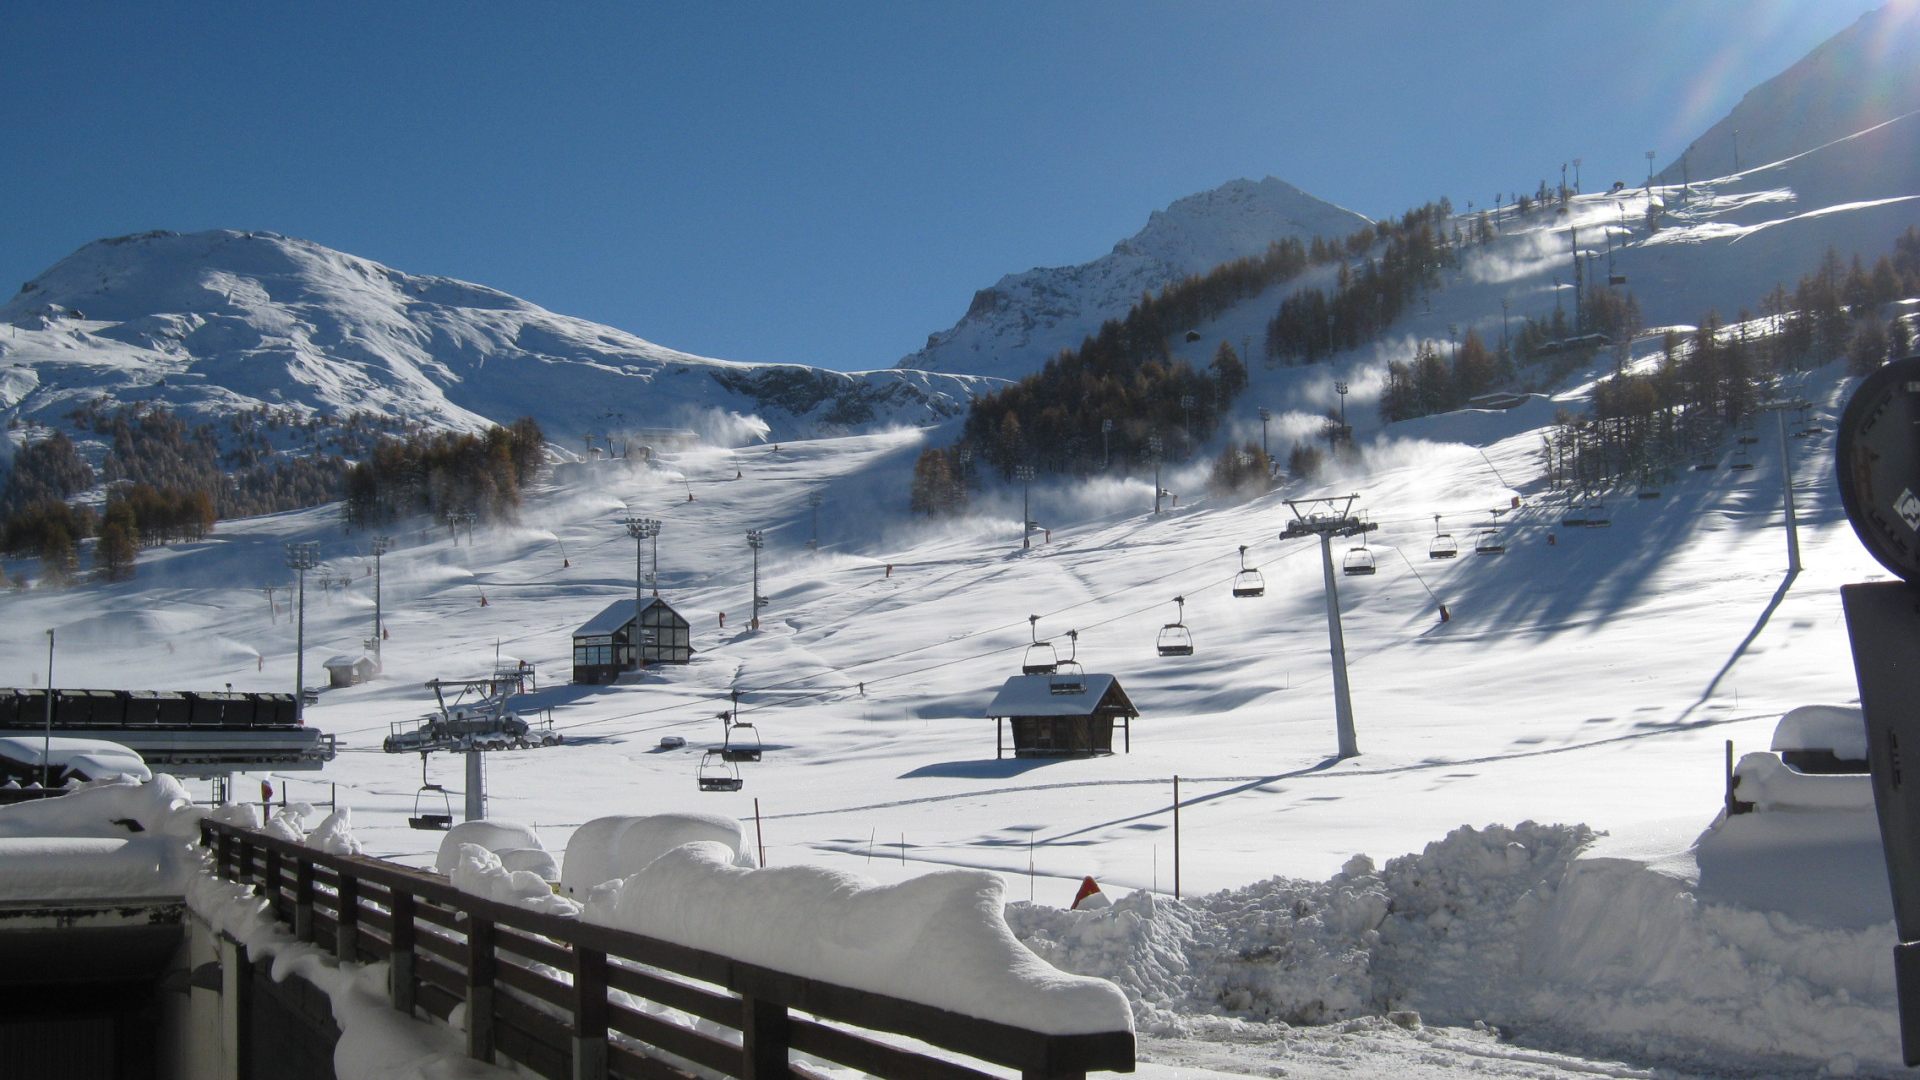 Sunshine ski resort Sestriere, Italy